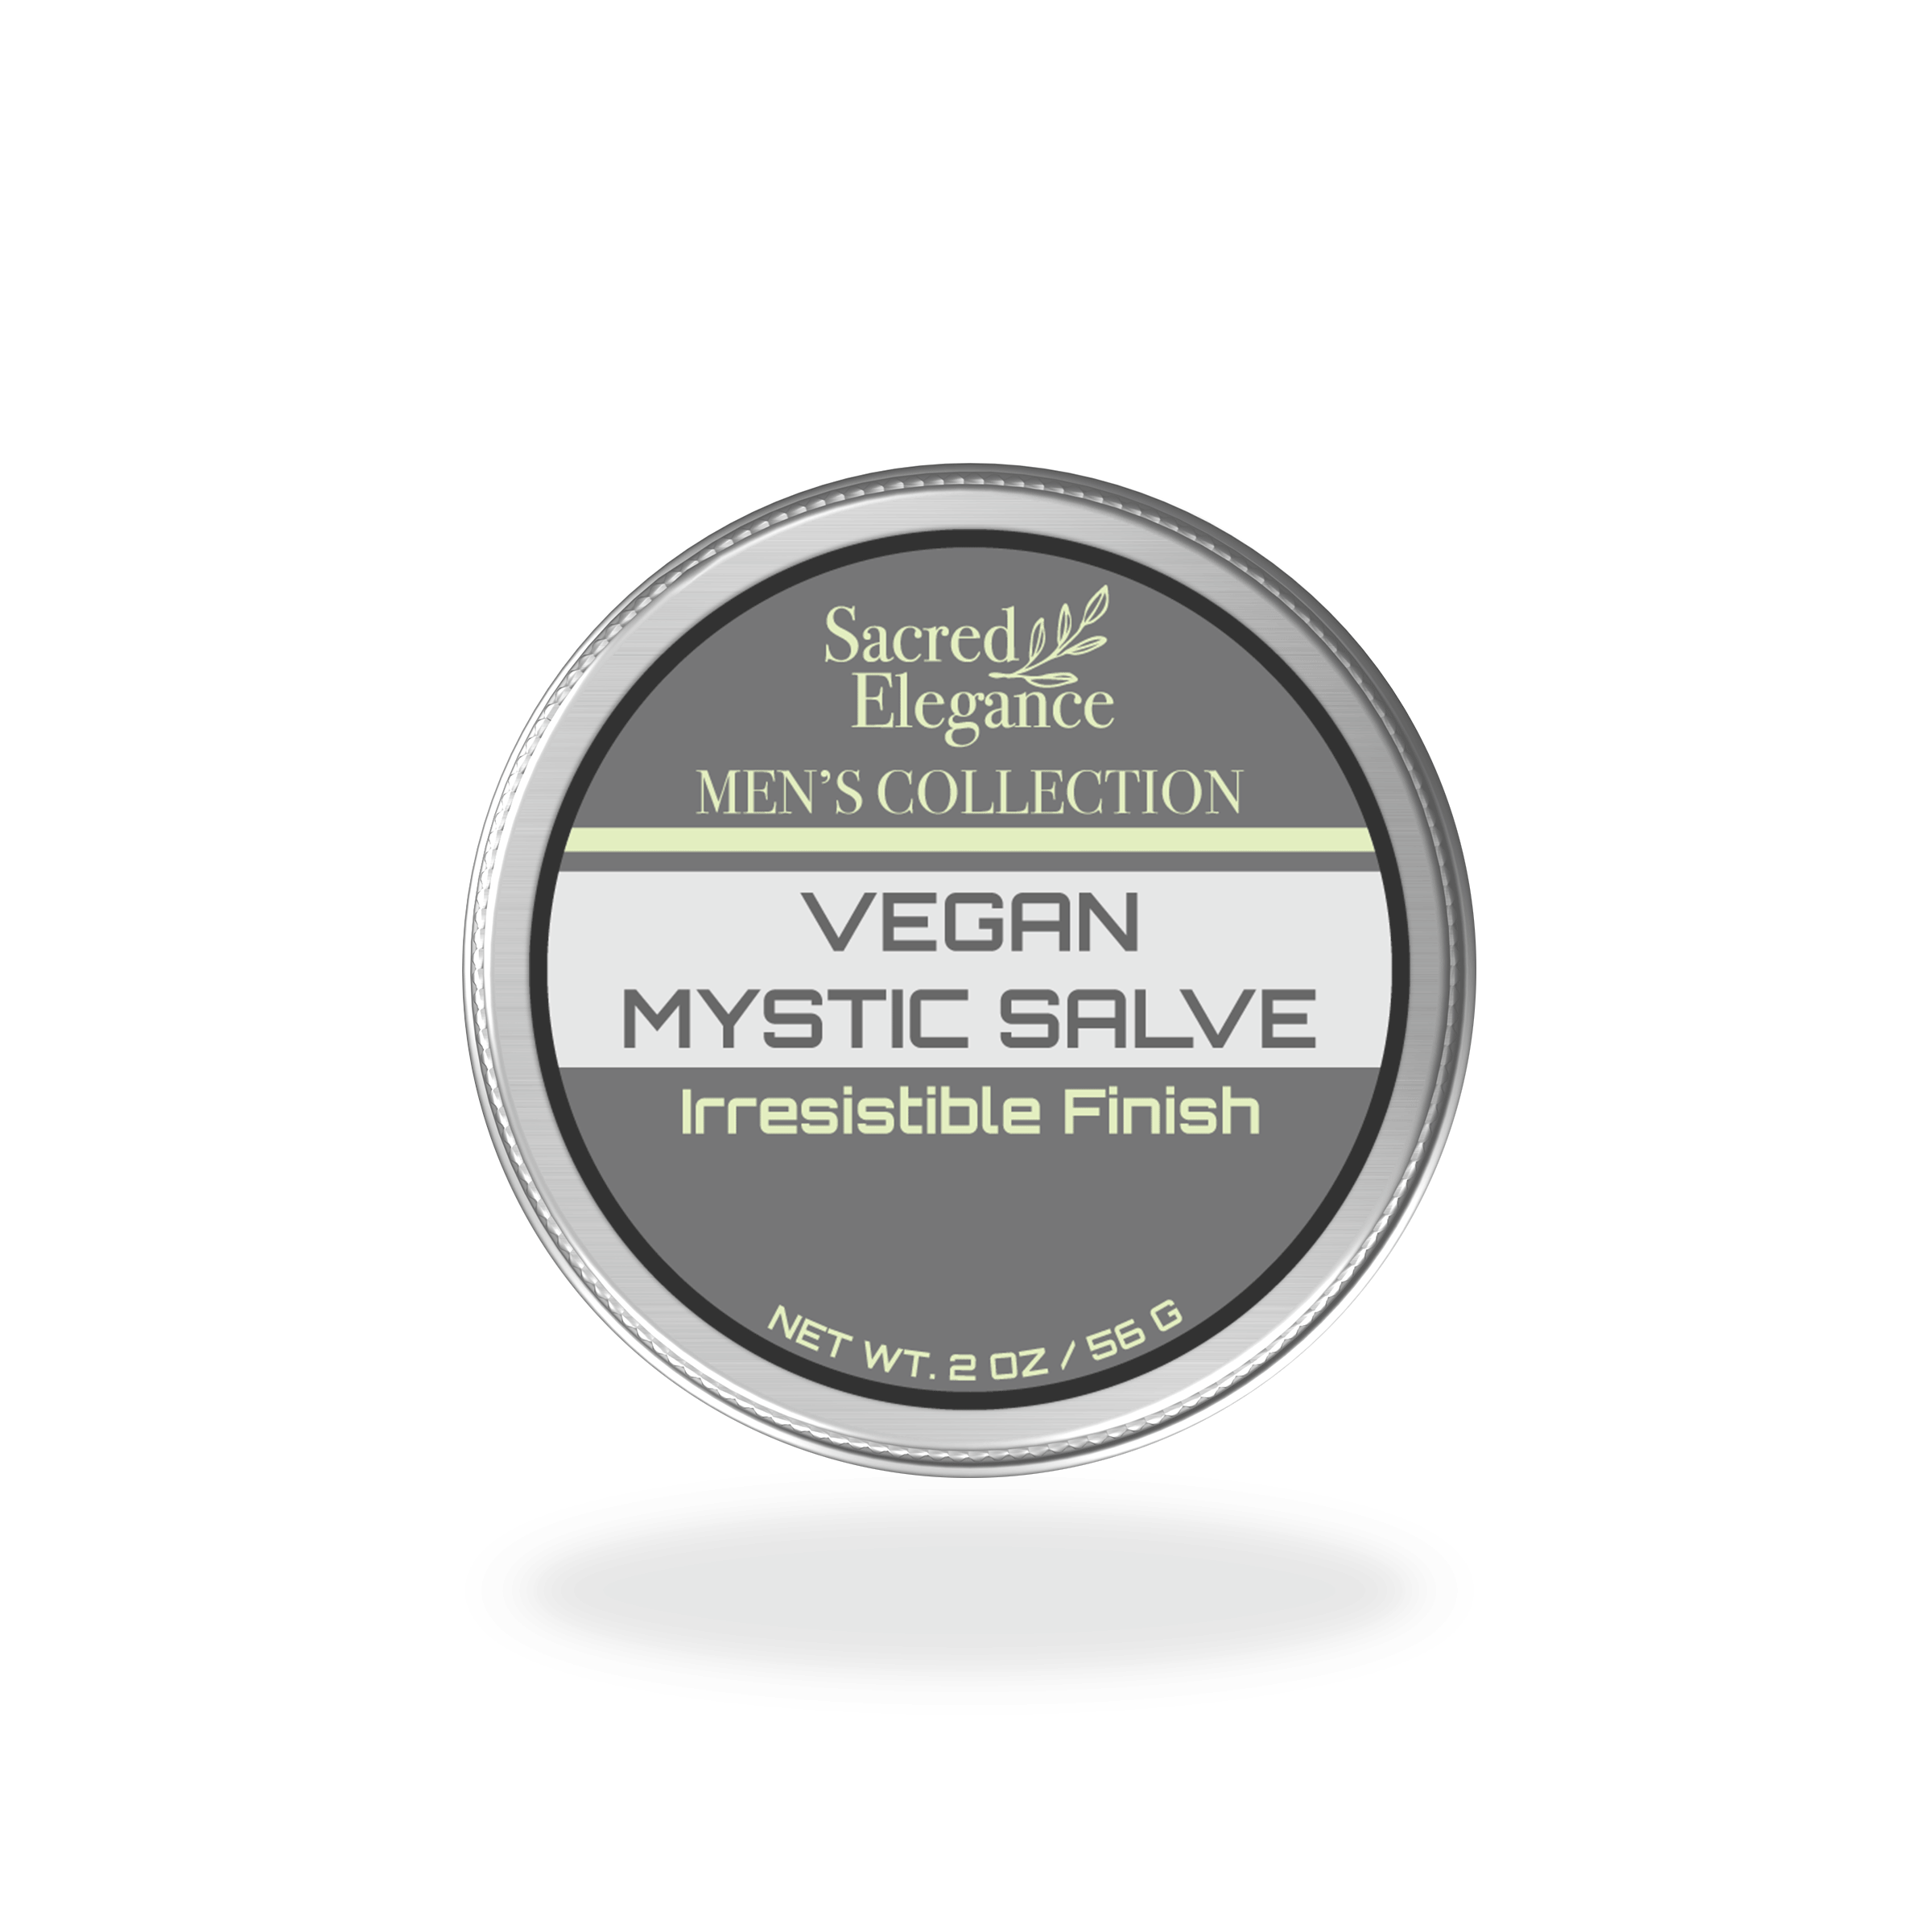 Irresistible Finish Vegan Mystic Salve